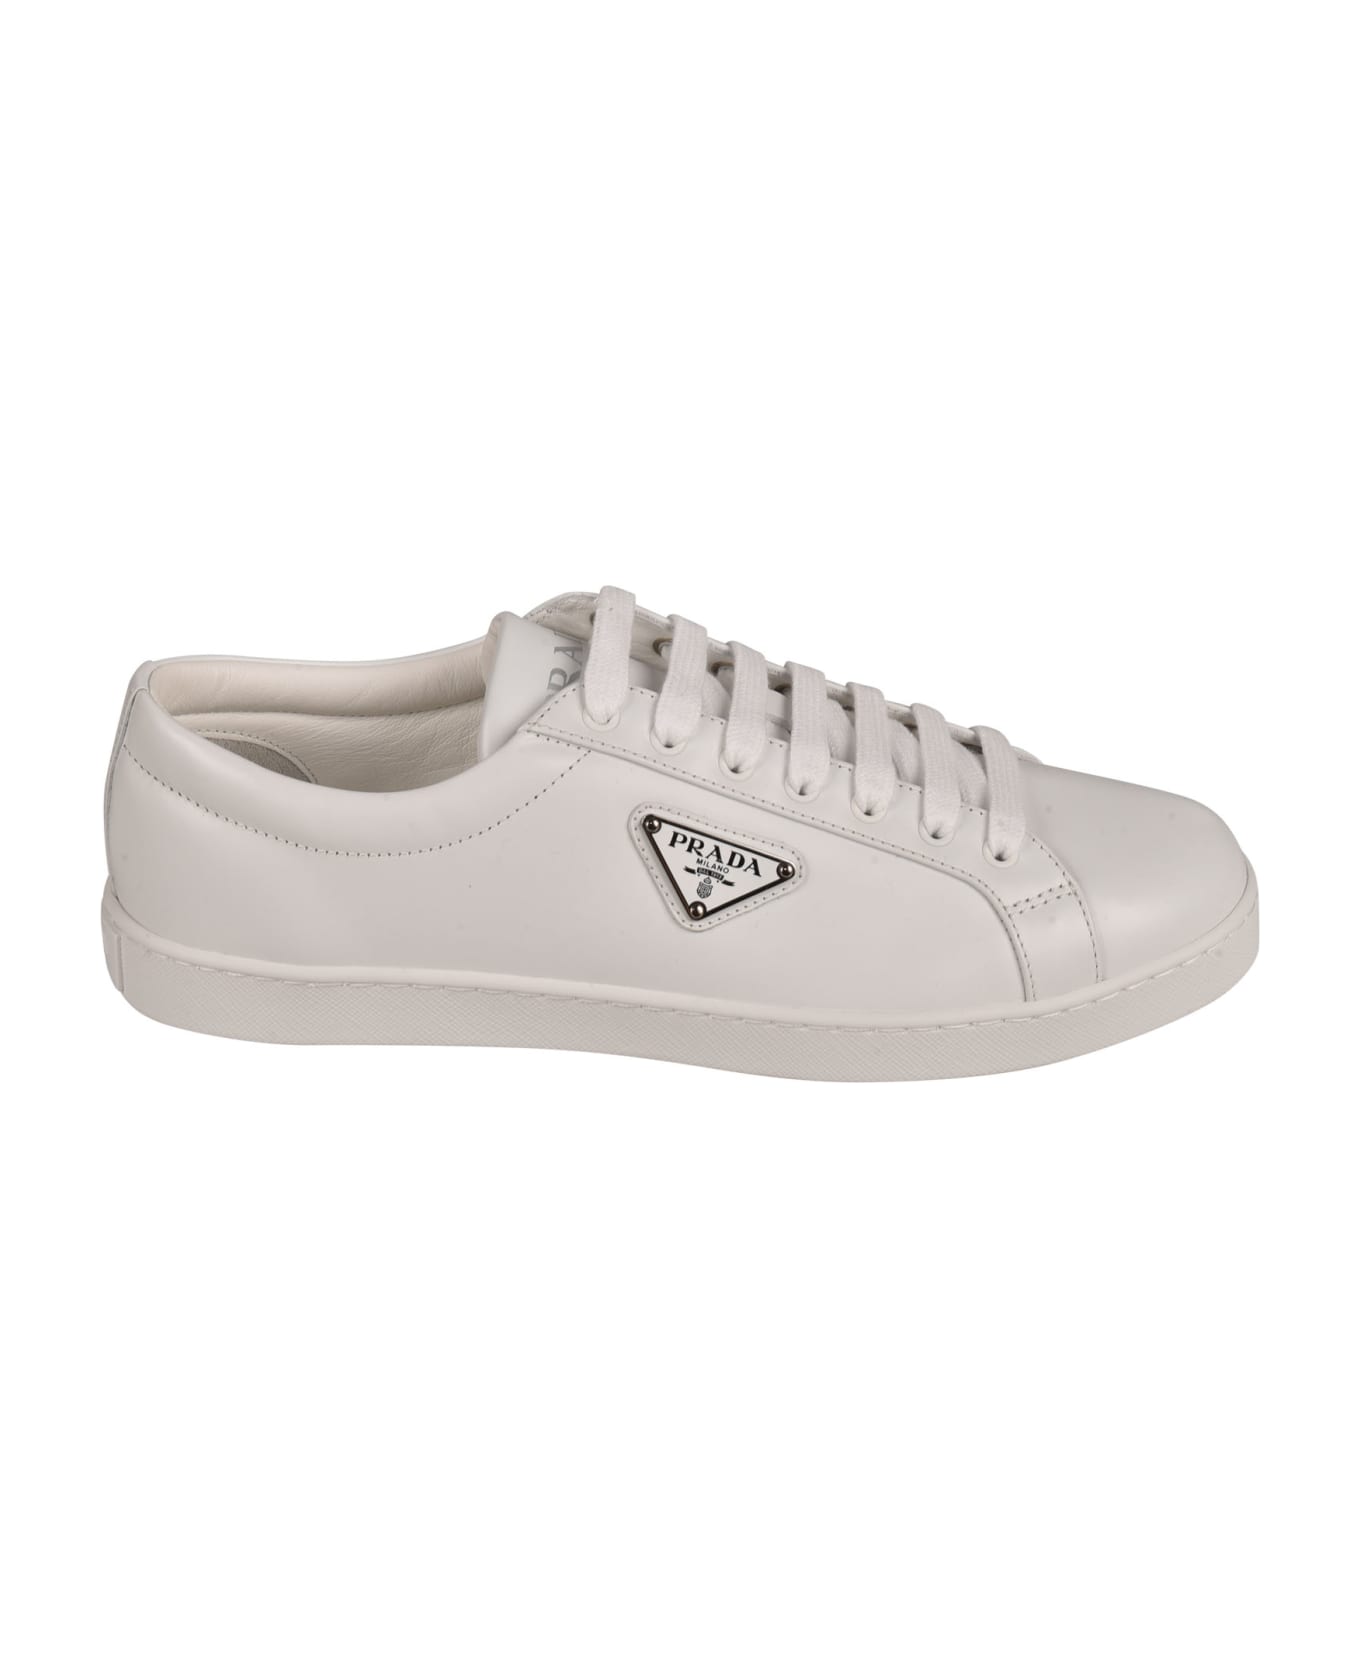 Prada Lane Sneakers - White